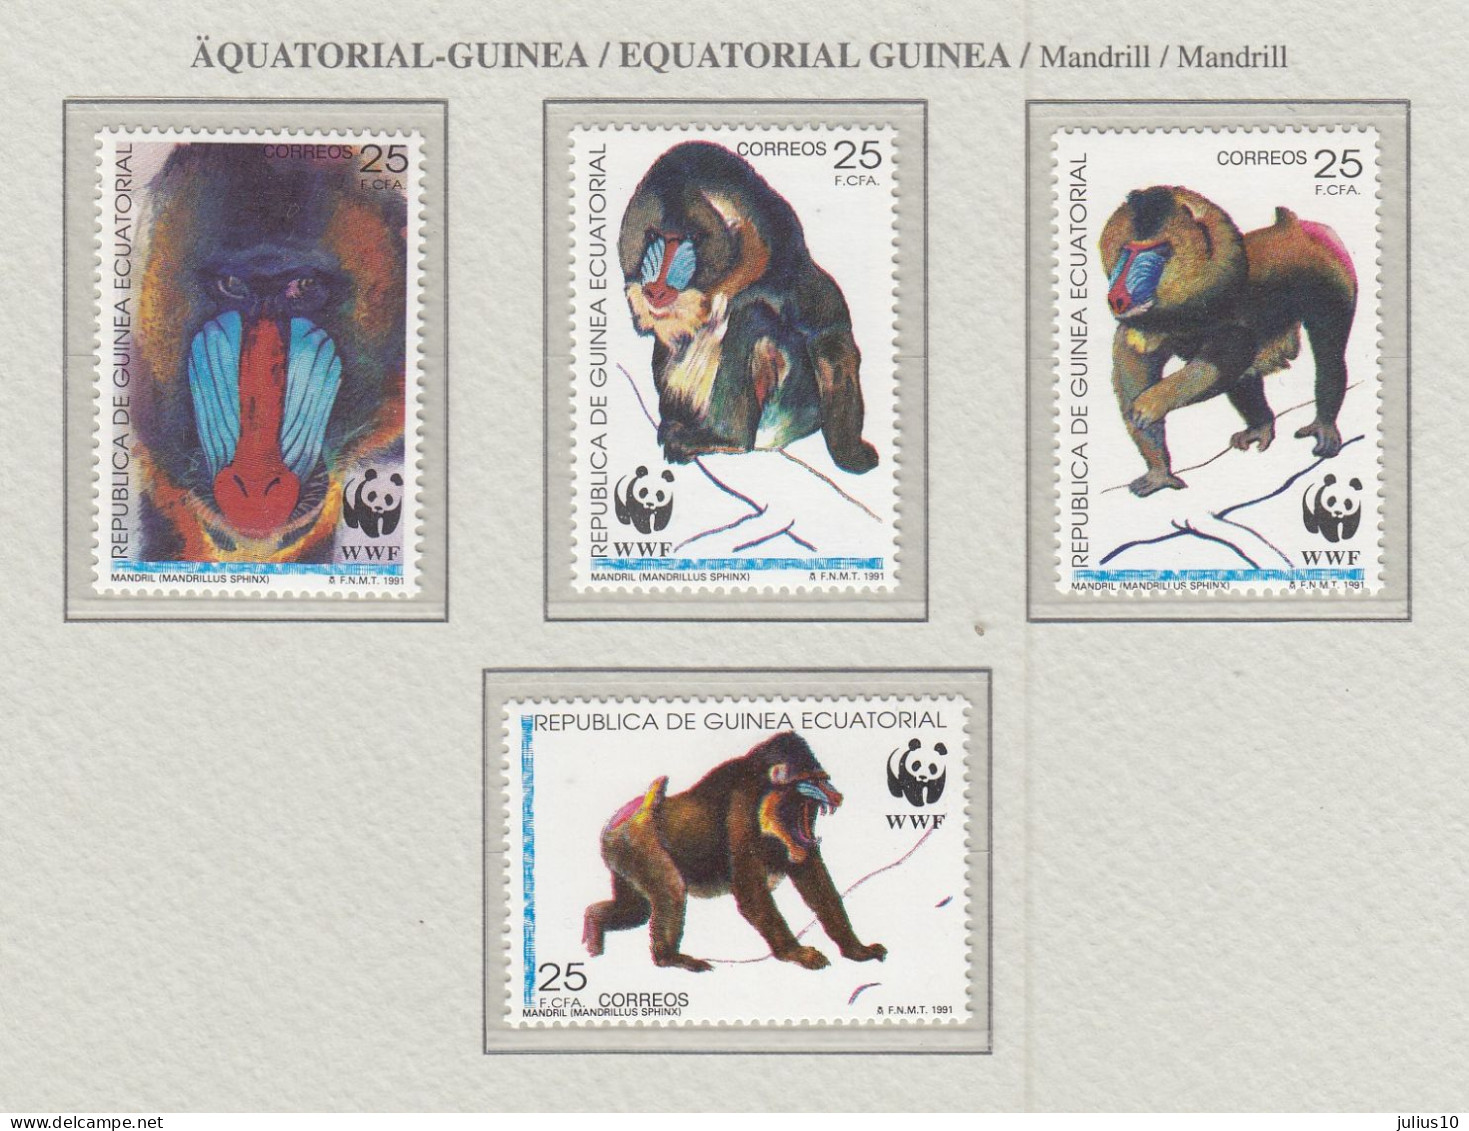 EQUATORIAL GUINEA 1991 WWF Monkeys Mandrill MNH(**) Fauna 797 - Mono